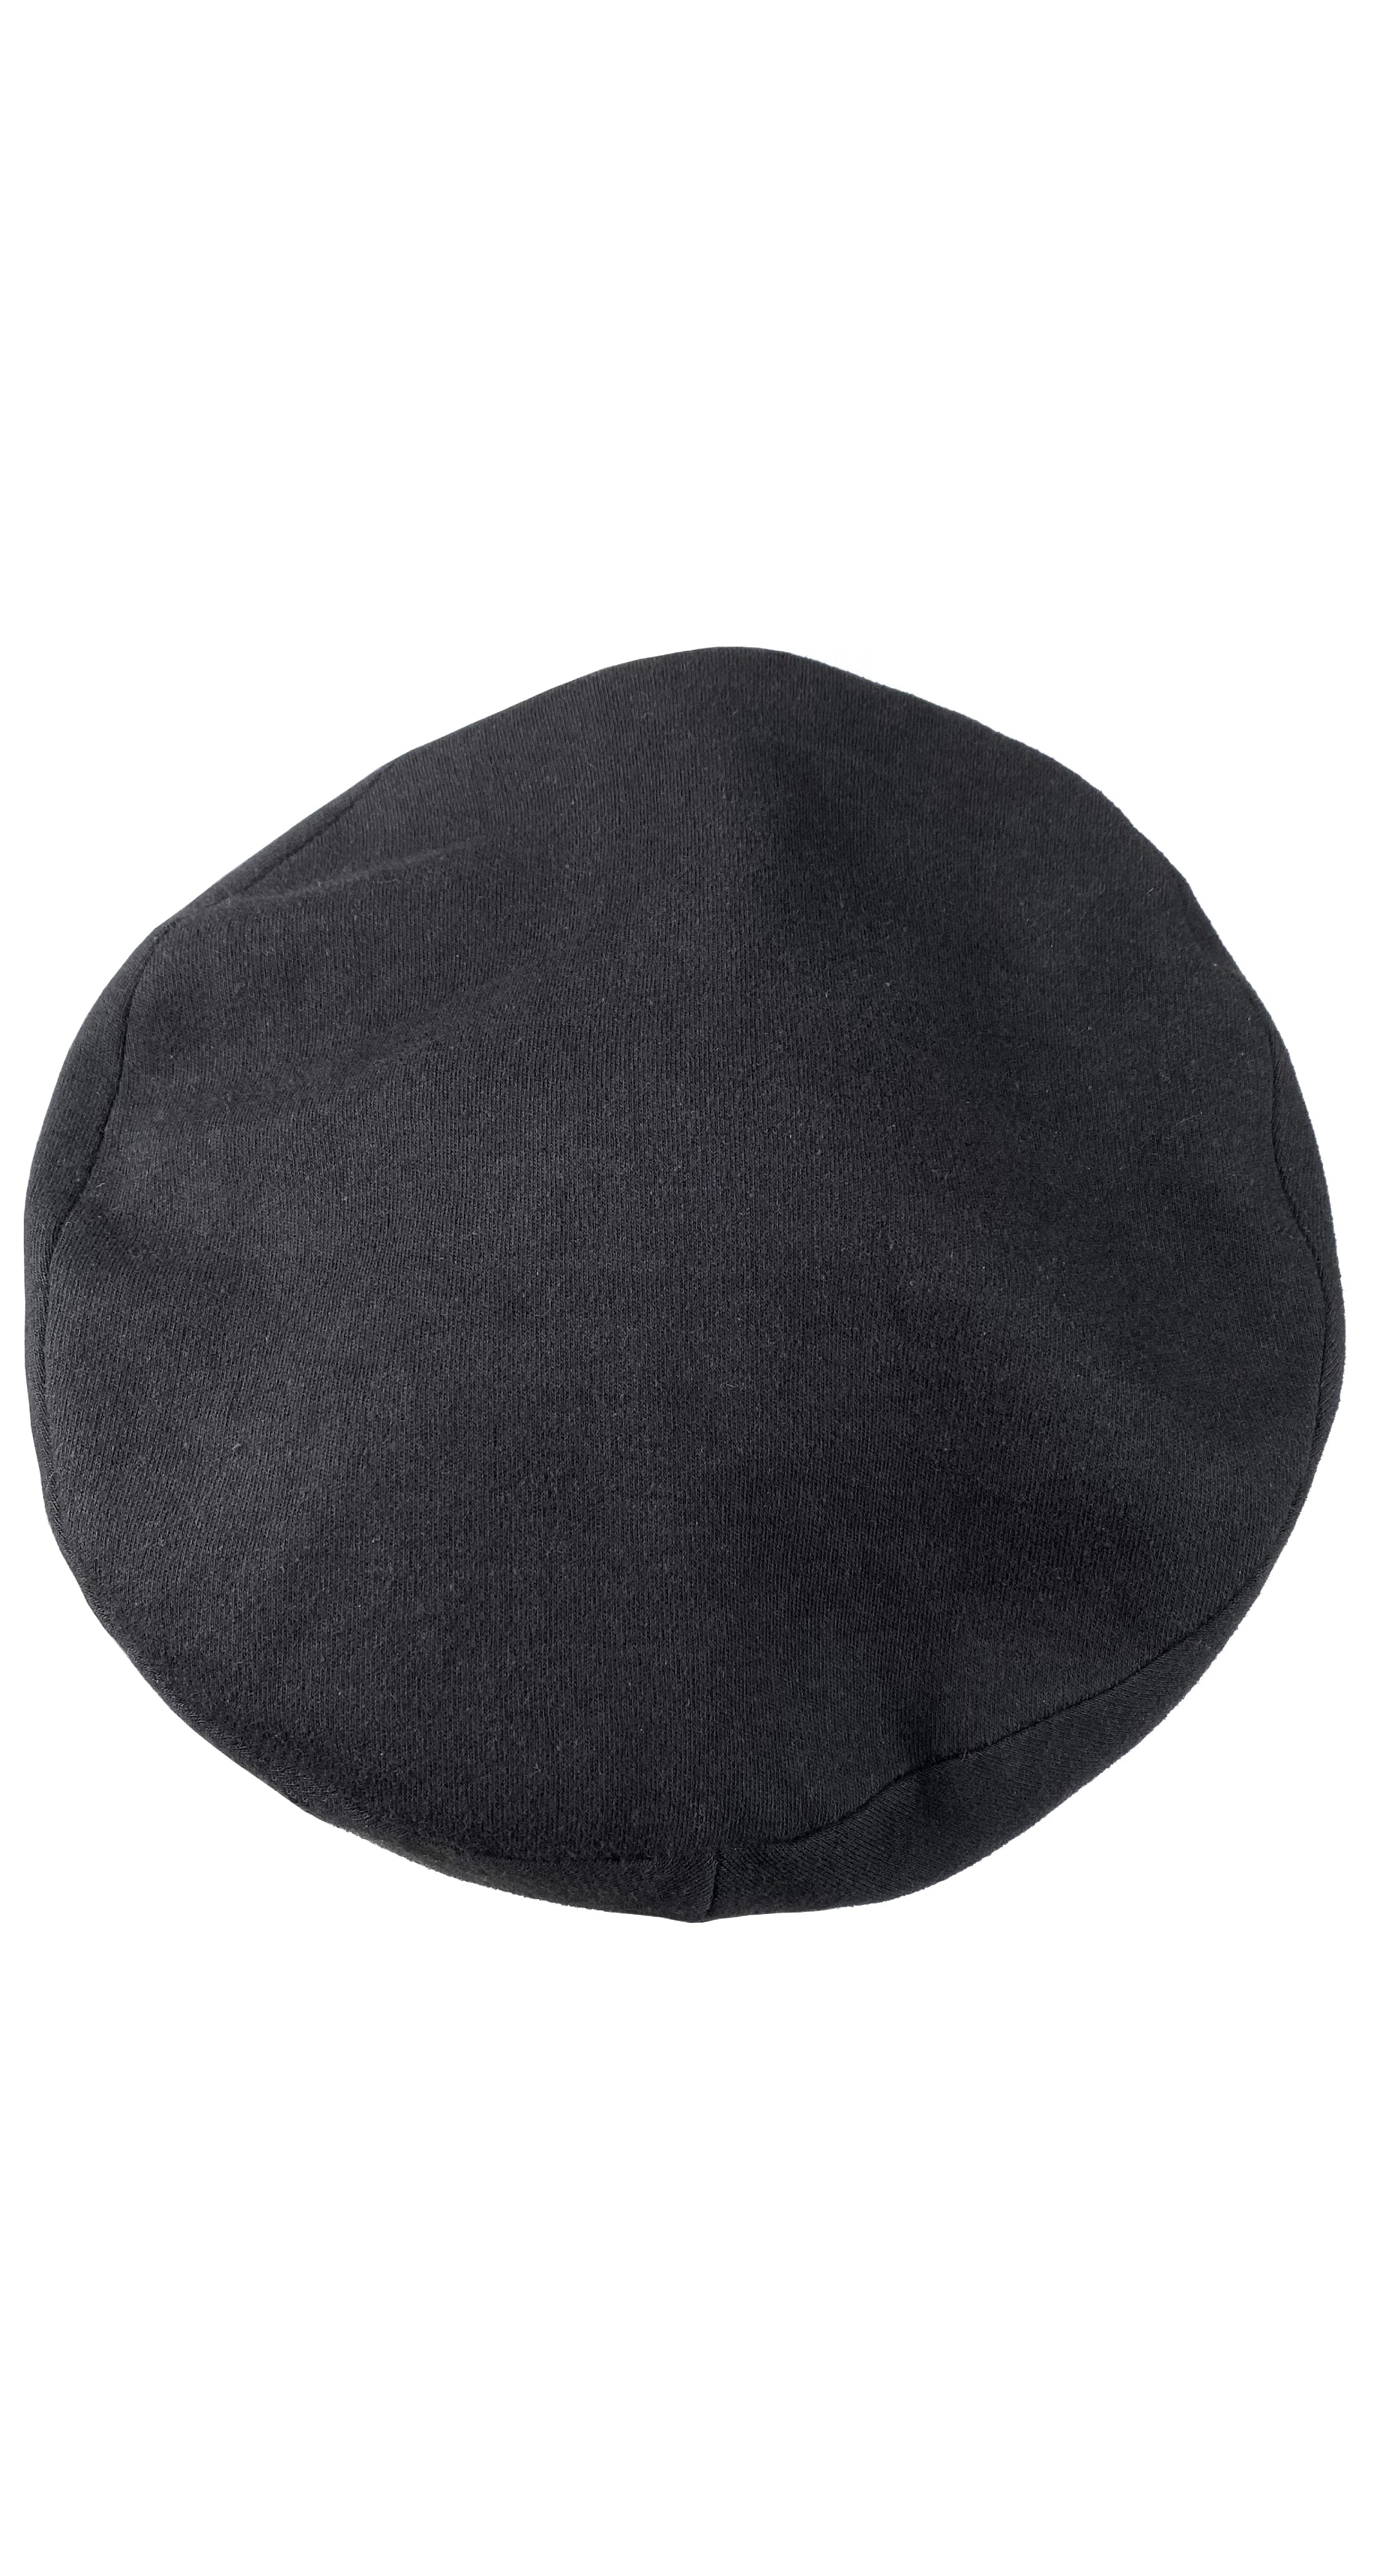 1990s Black Cotton Oversized Newsboy Cap